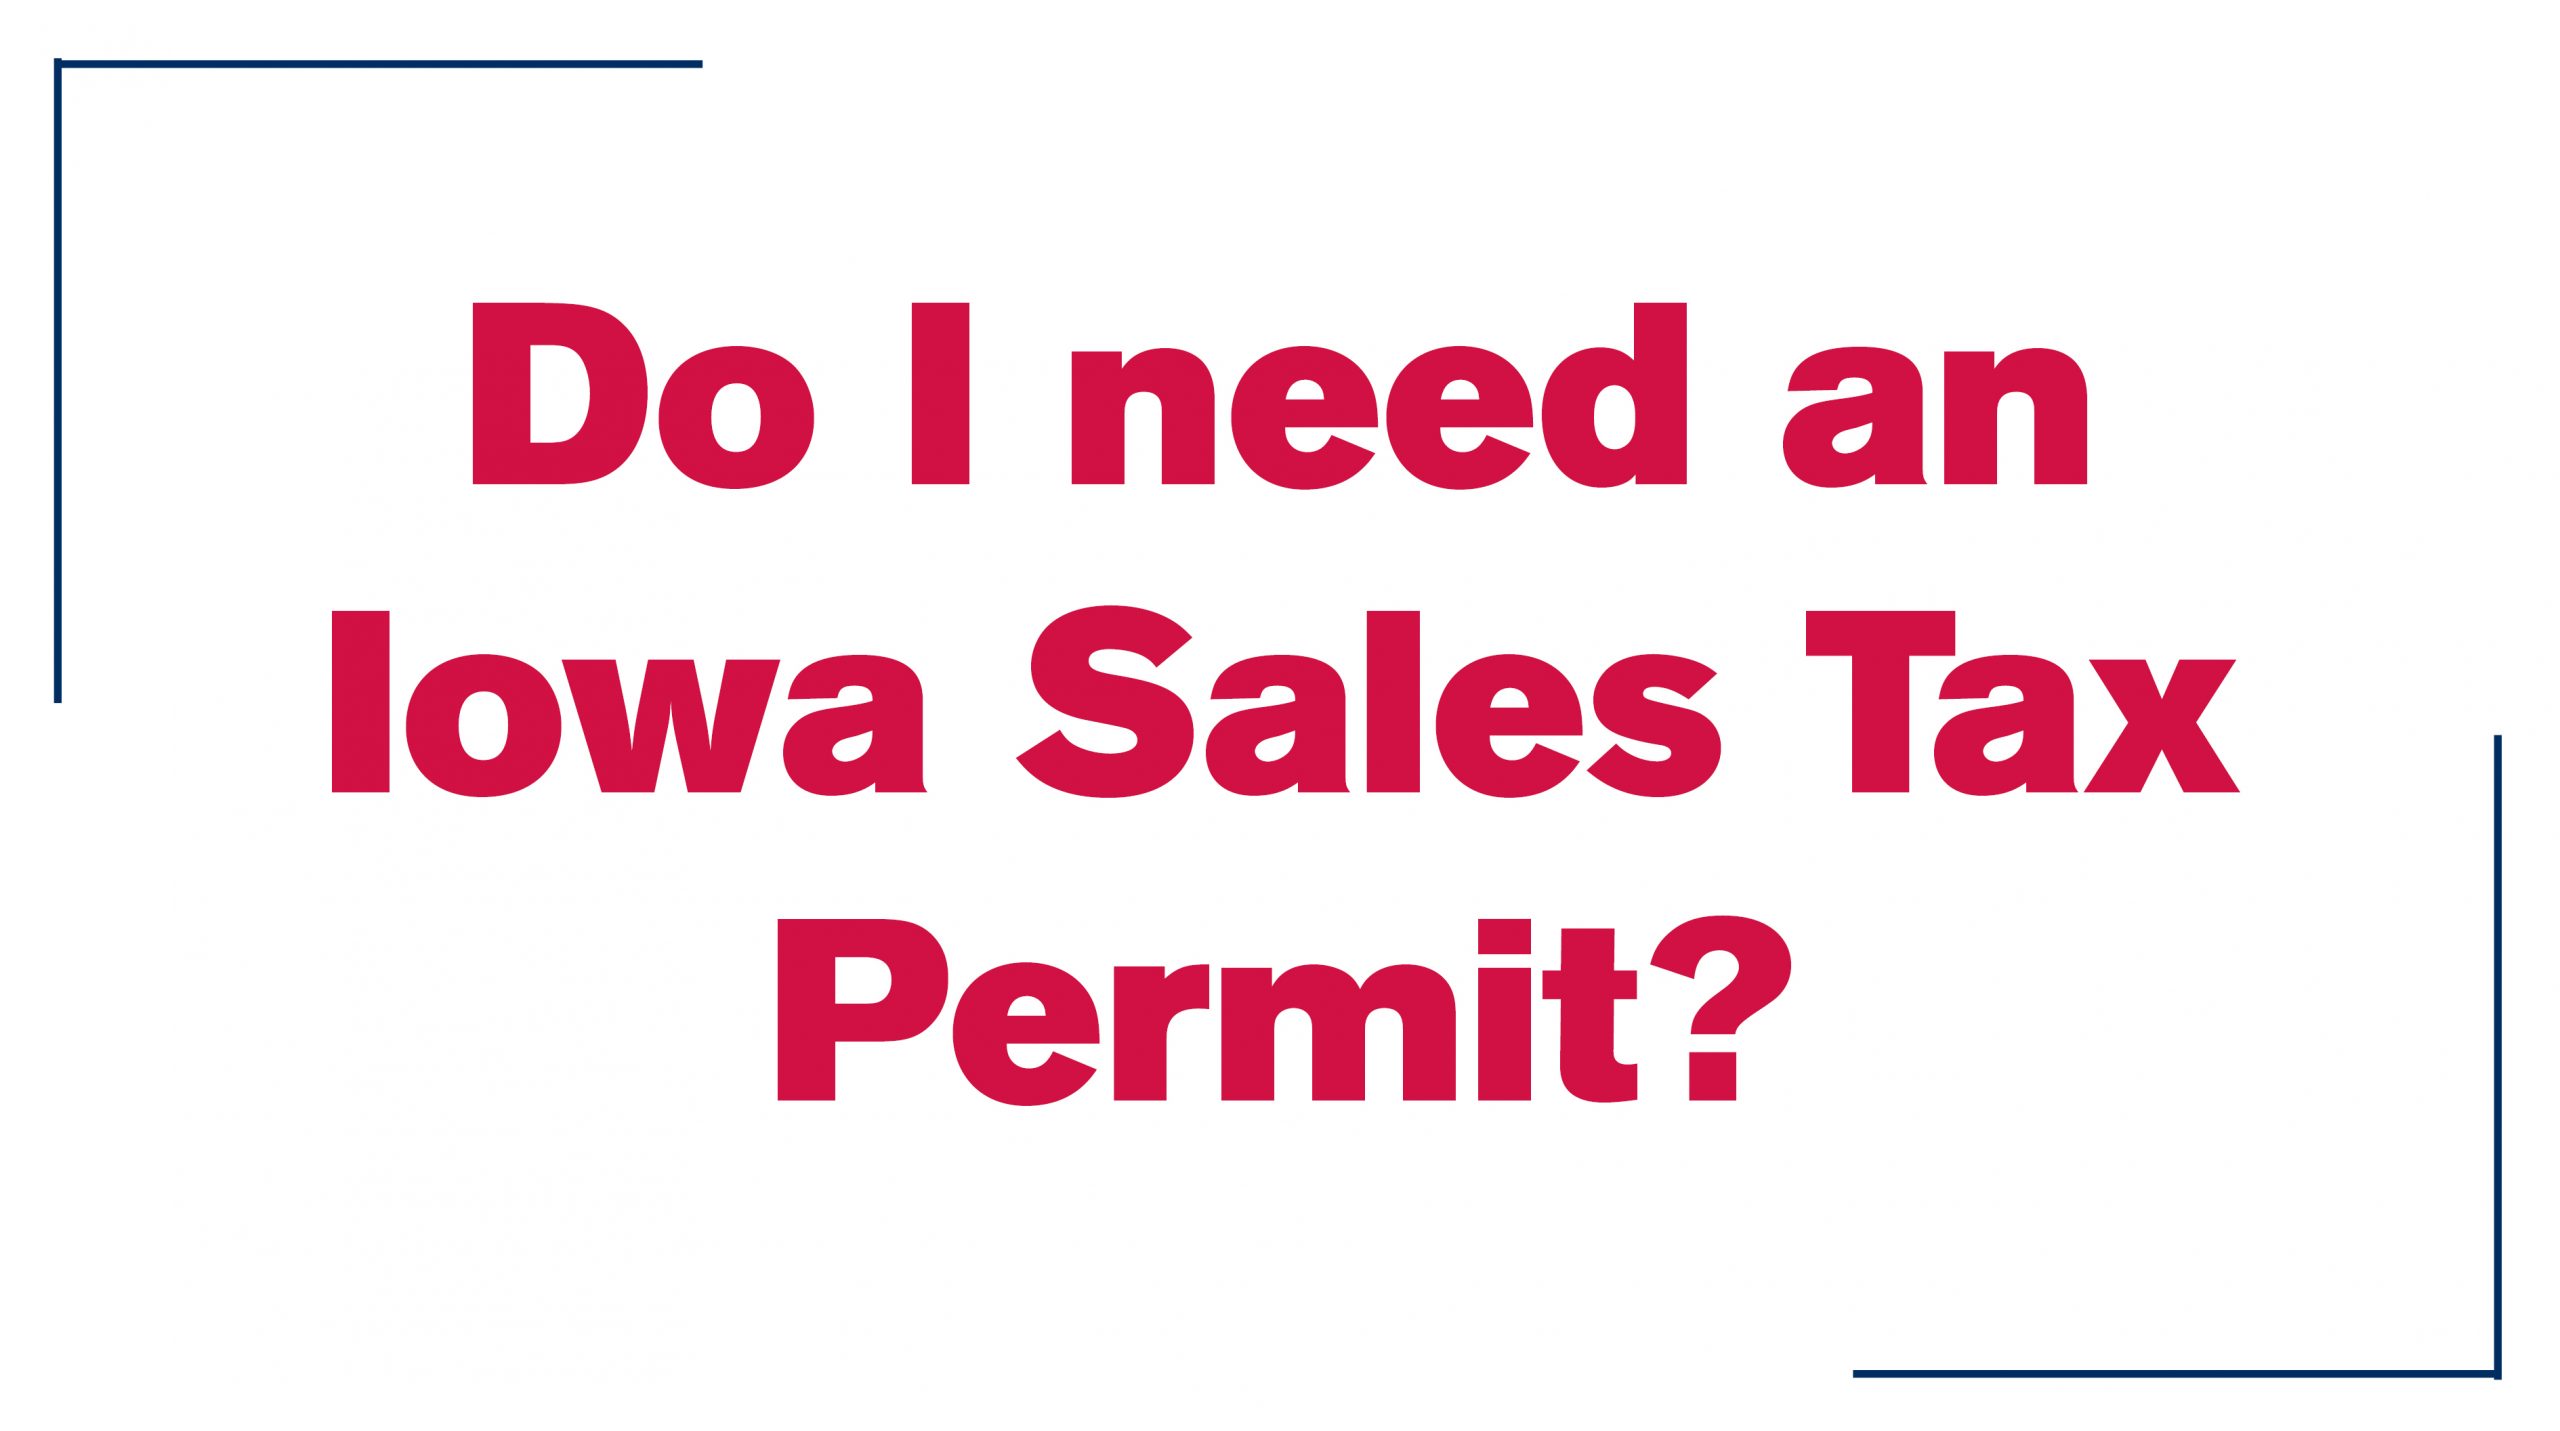 Do I need an Iowa Sales Tax Permit? Iowa Small Business Development